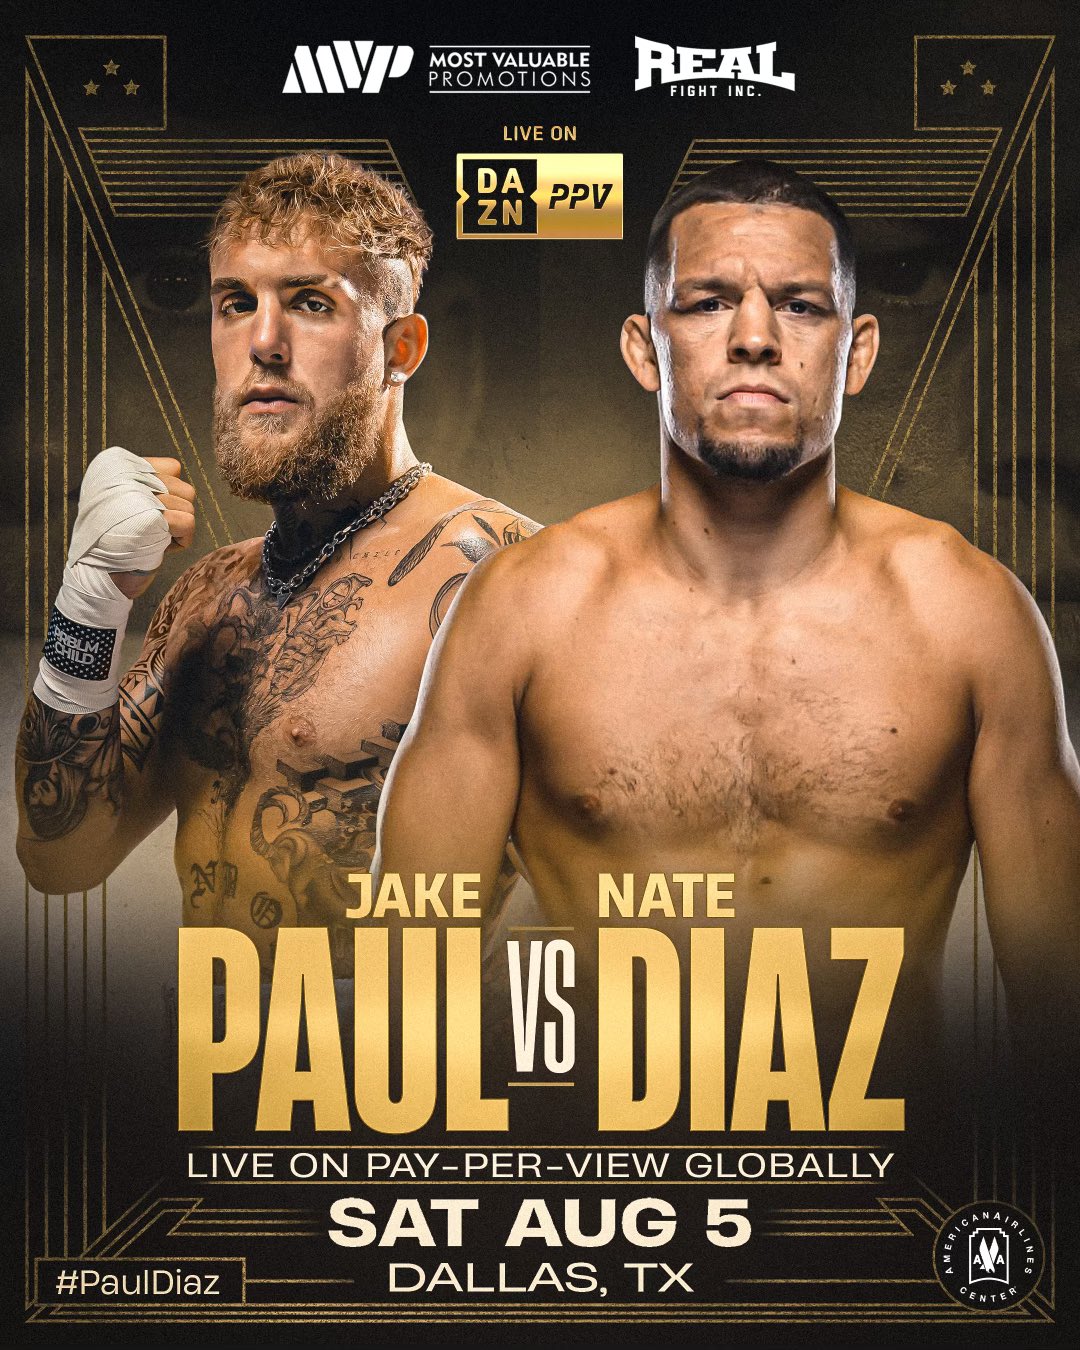 Jake Paul vs Nate Diaz